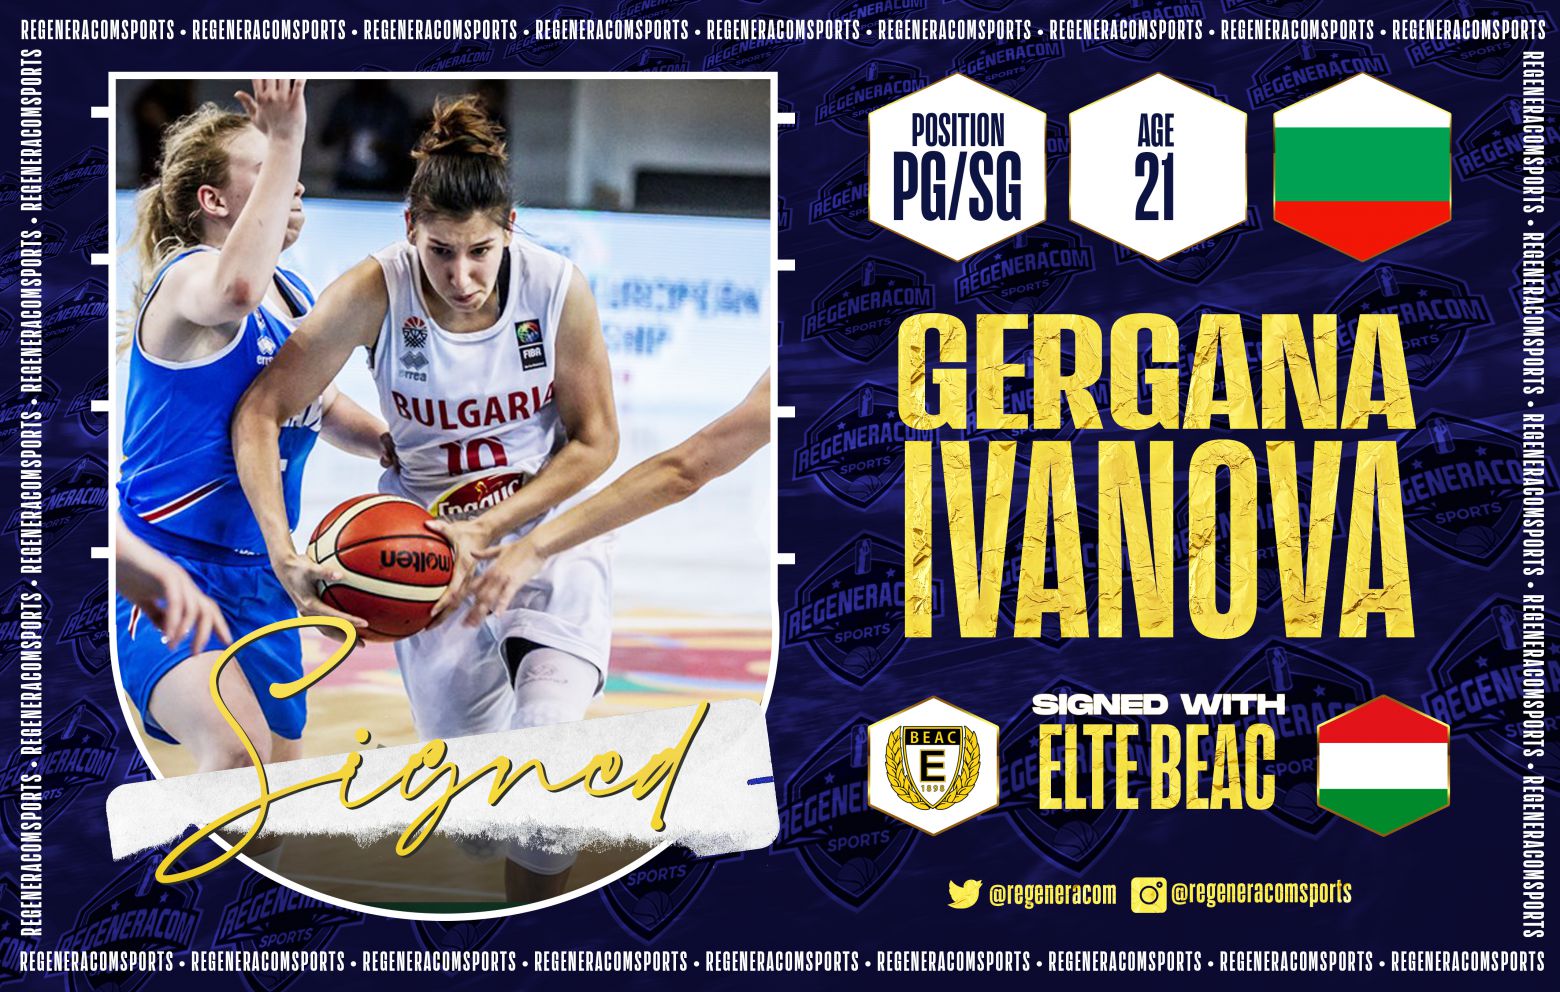 GERGANA IVANOVA has signed in Hungary with BEAC for the 2021/22 season